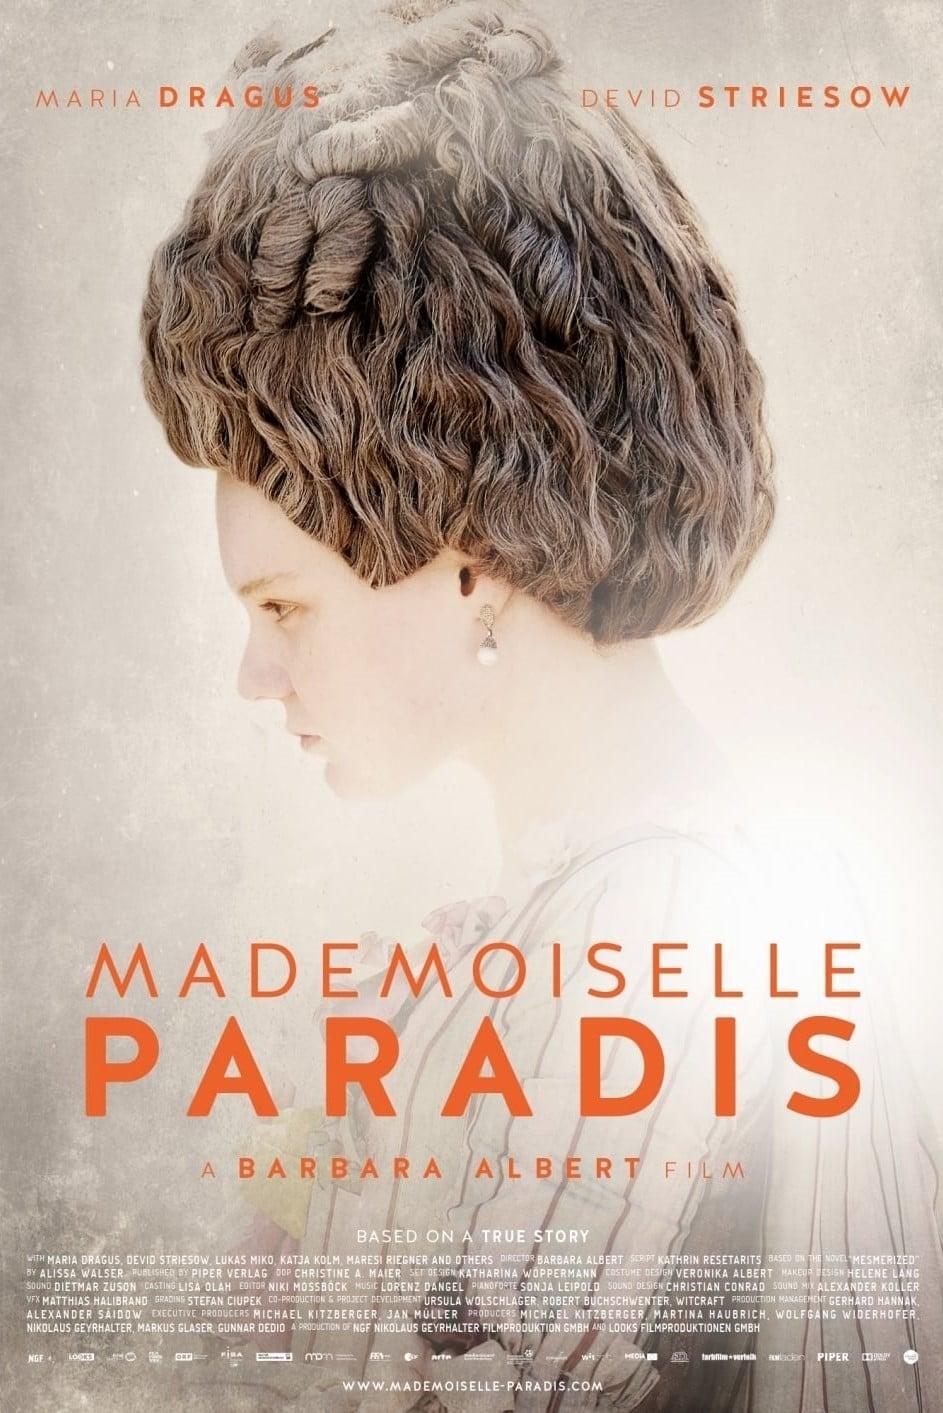 Mademoiselle Paradis poster